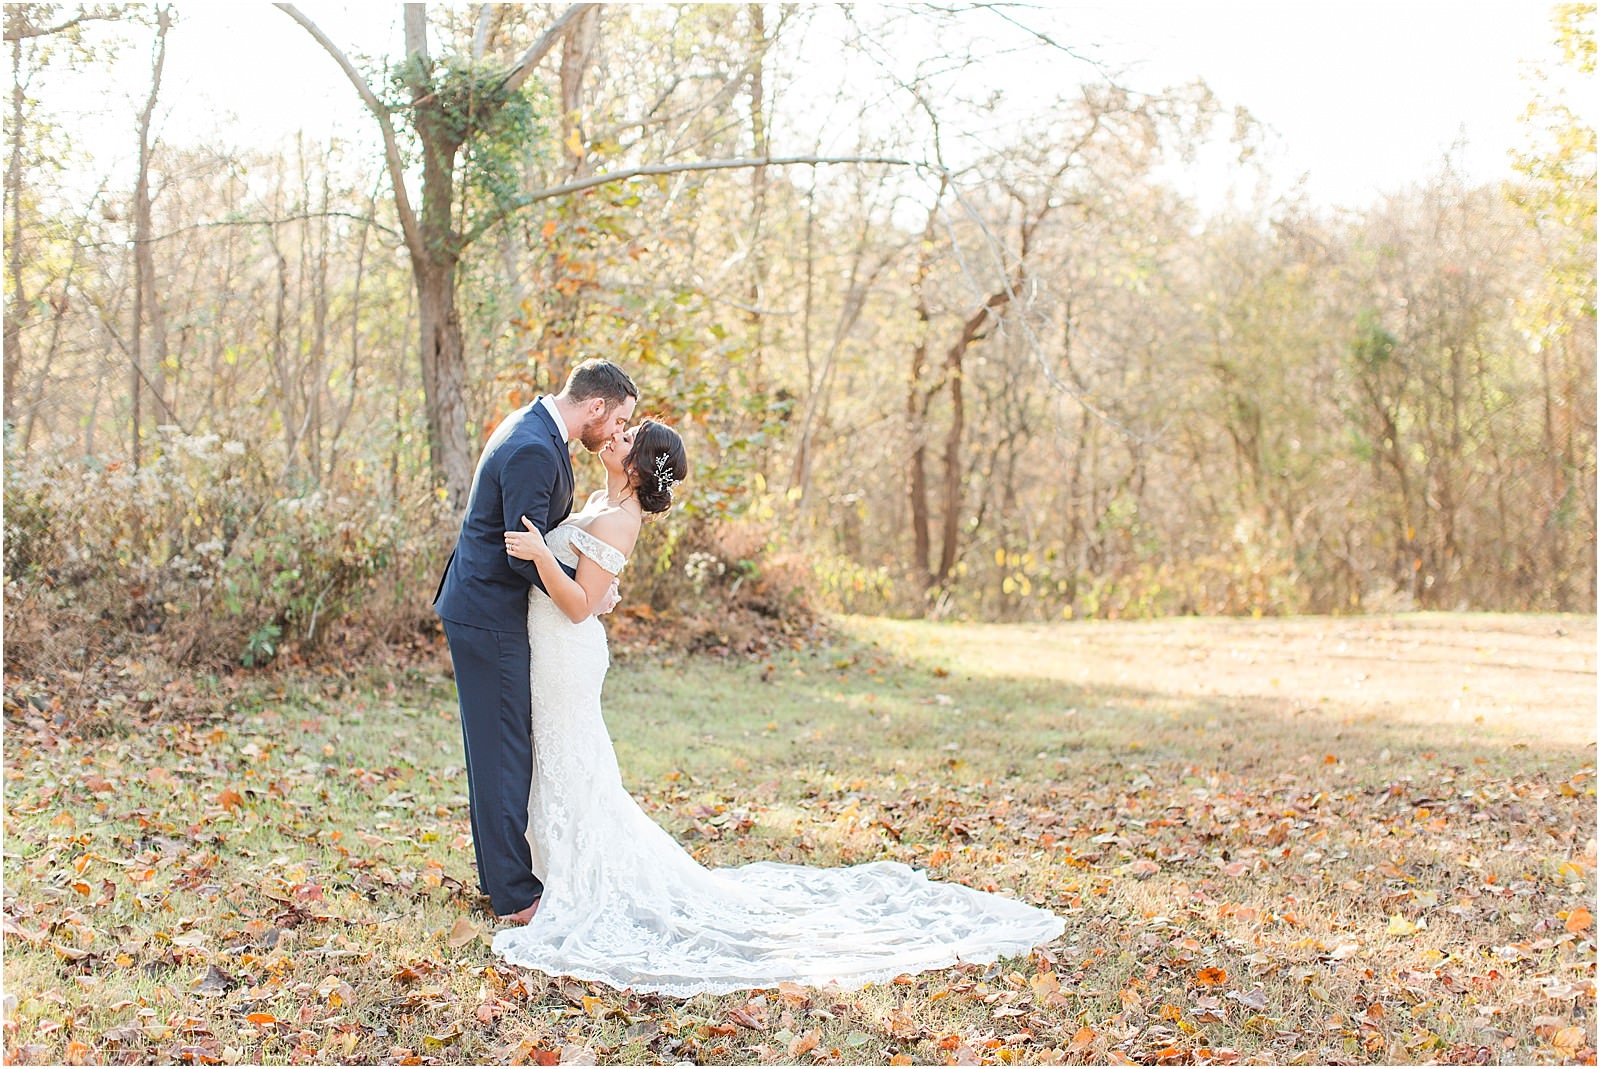 Walker and Alyssa's intimate fall wedding in Southern Indiana. | Wedding Photography | The Corner House Wedding | Southern Indiana Wedding | #fallwedding #intimatewedding | 036.jpg